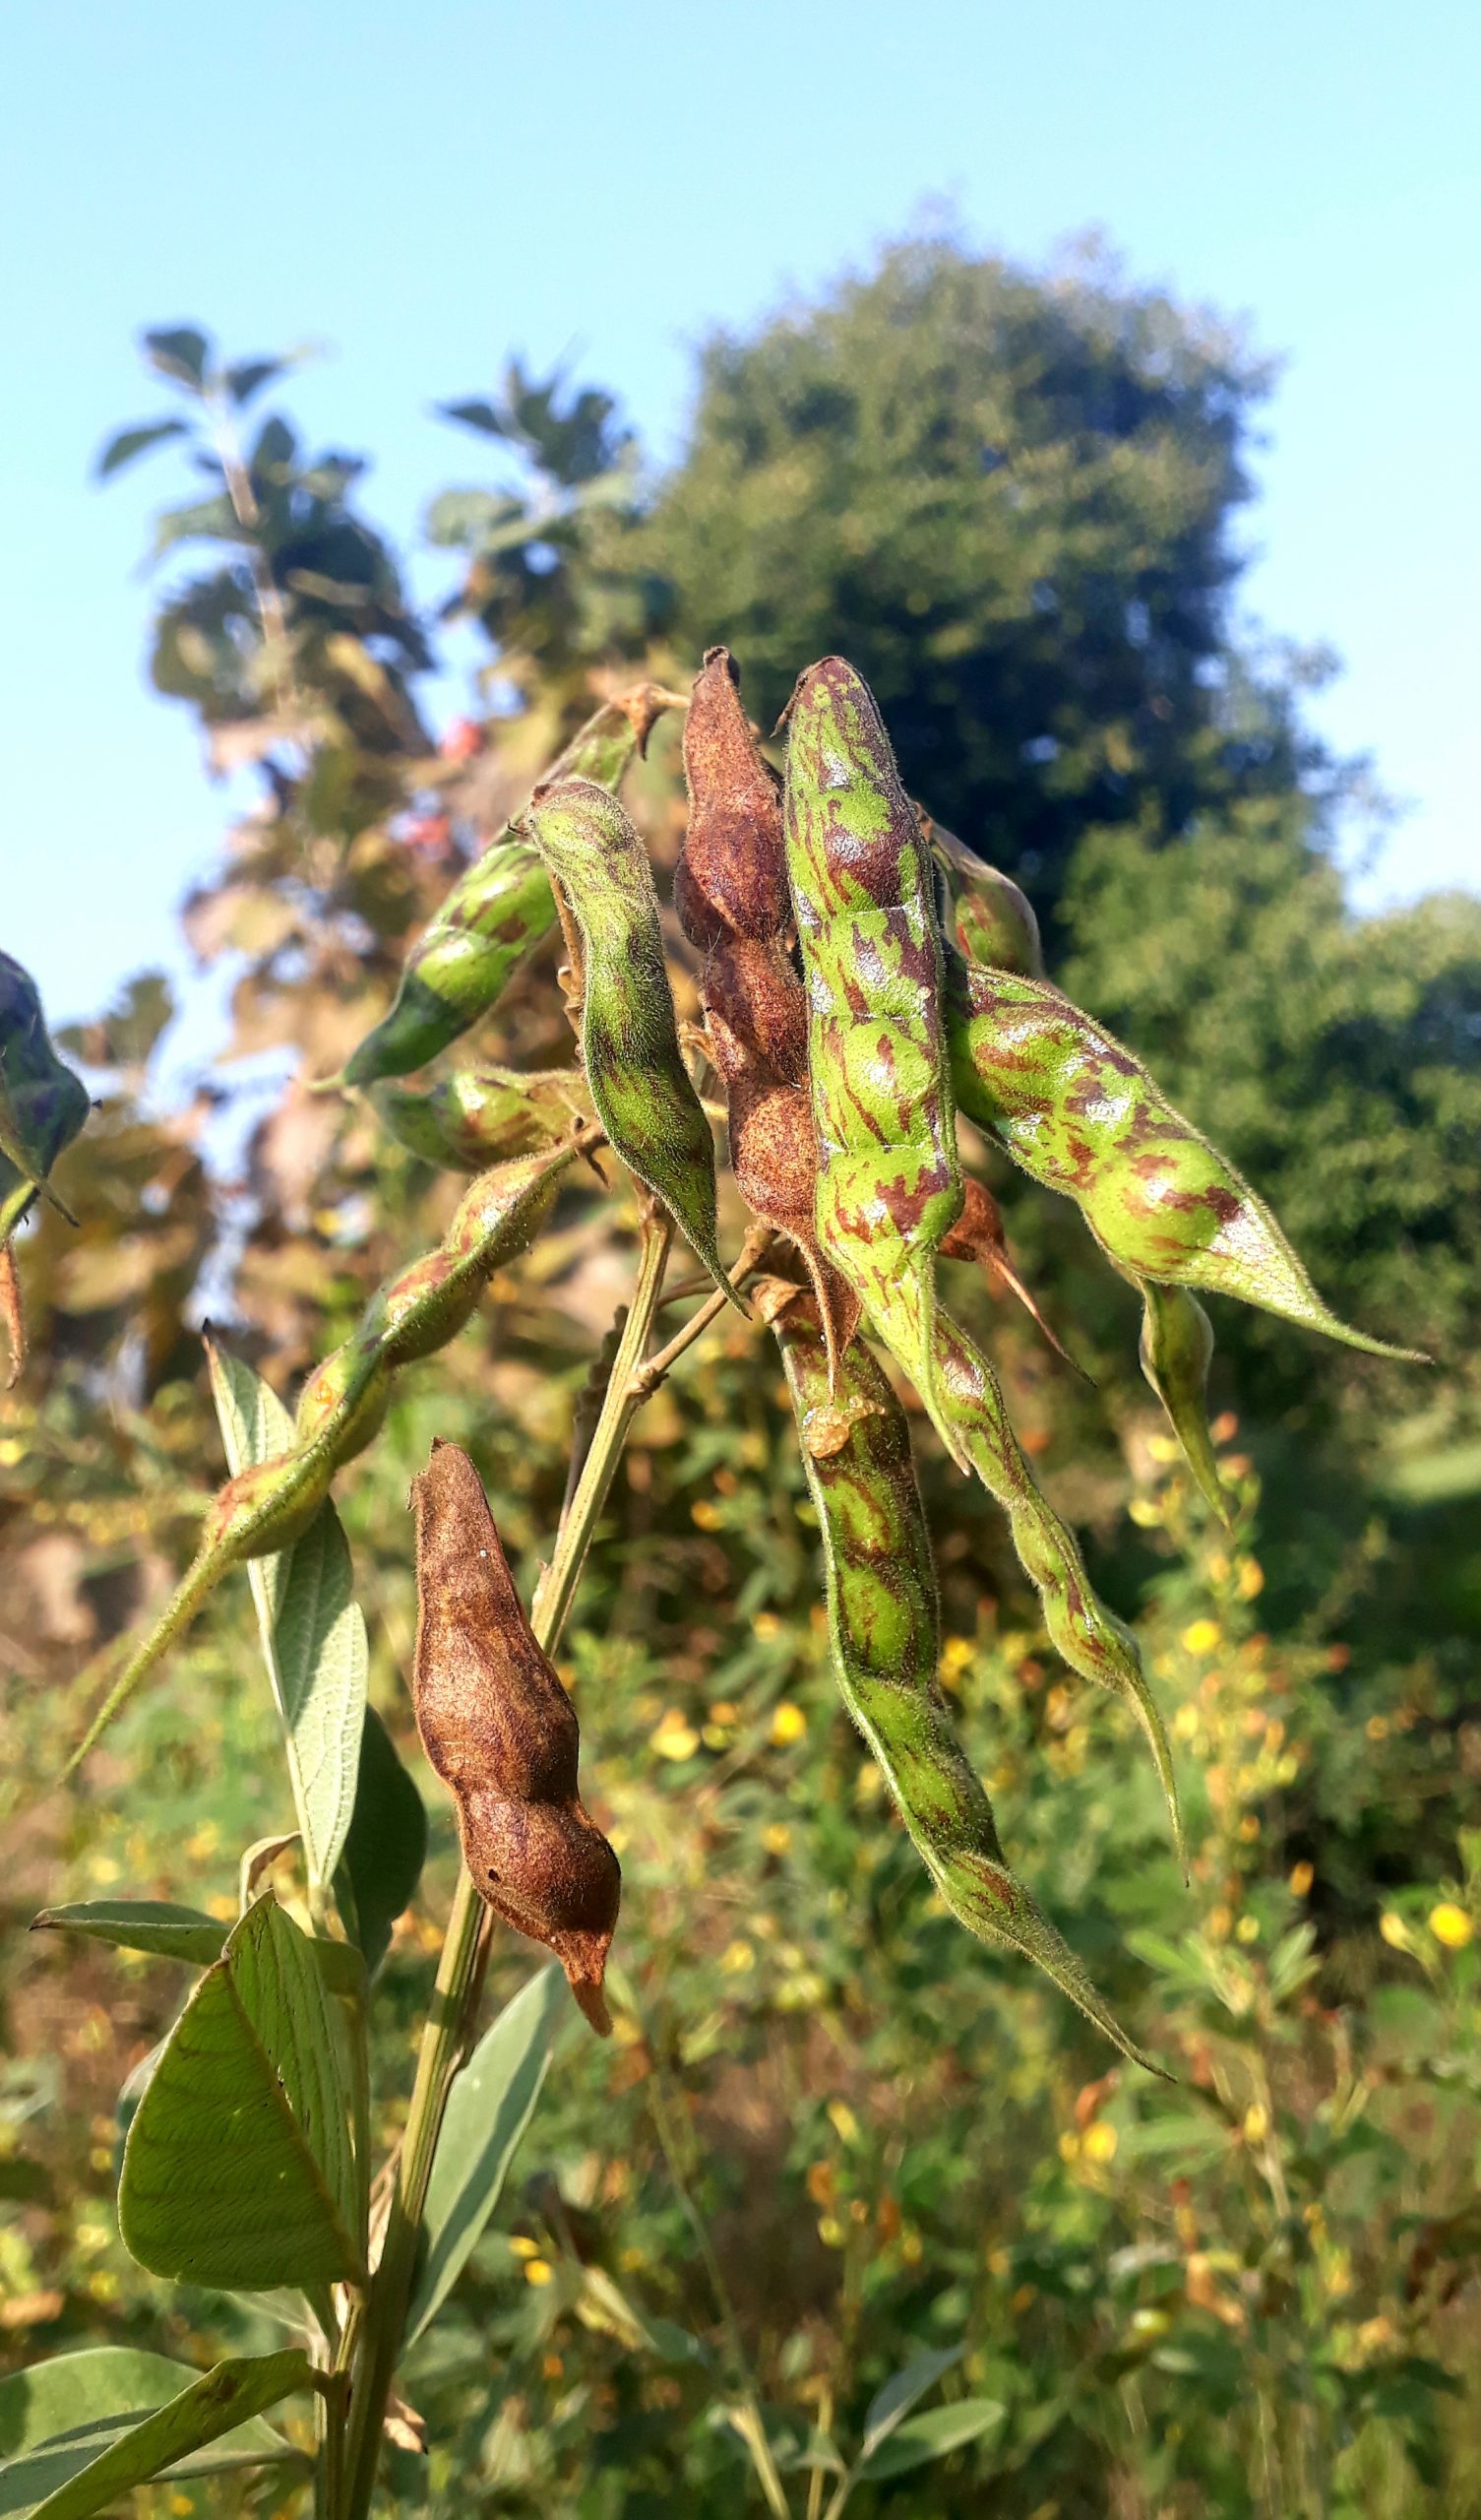 Beans on plant